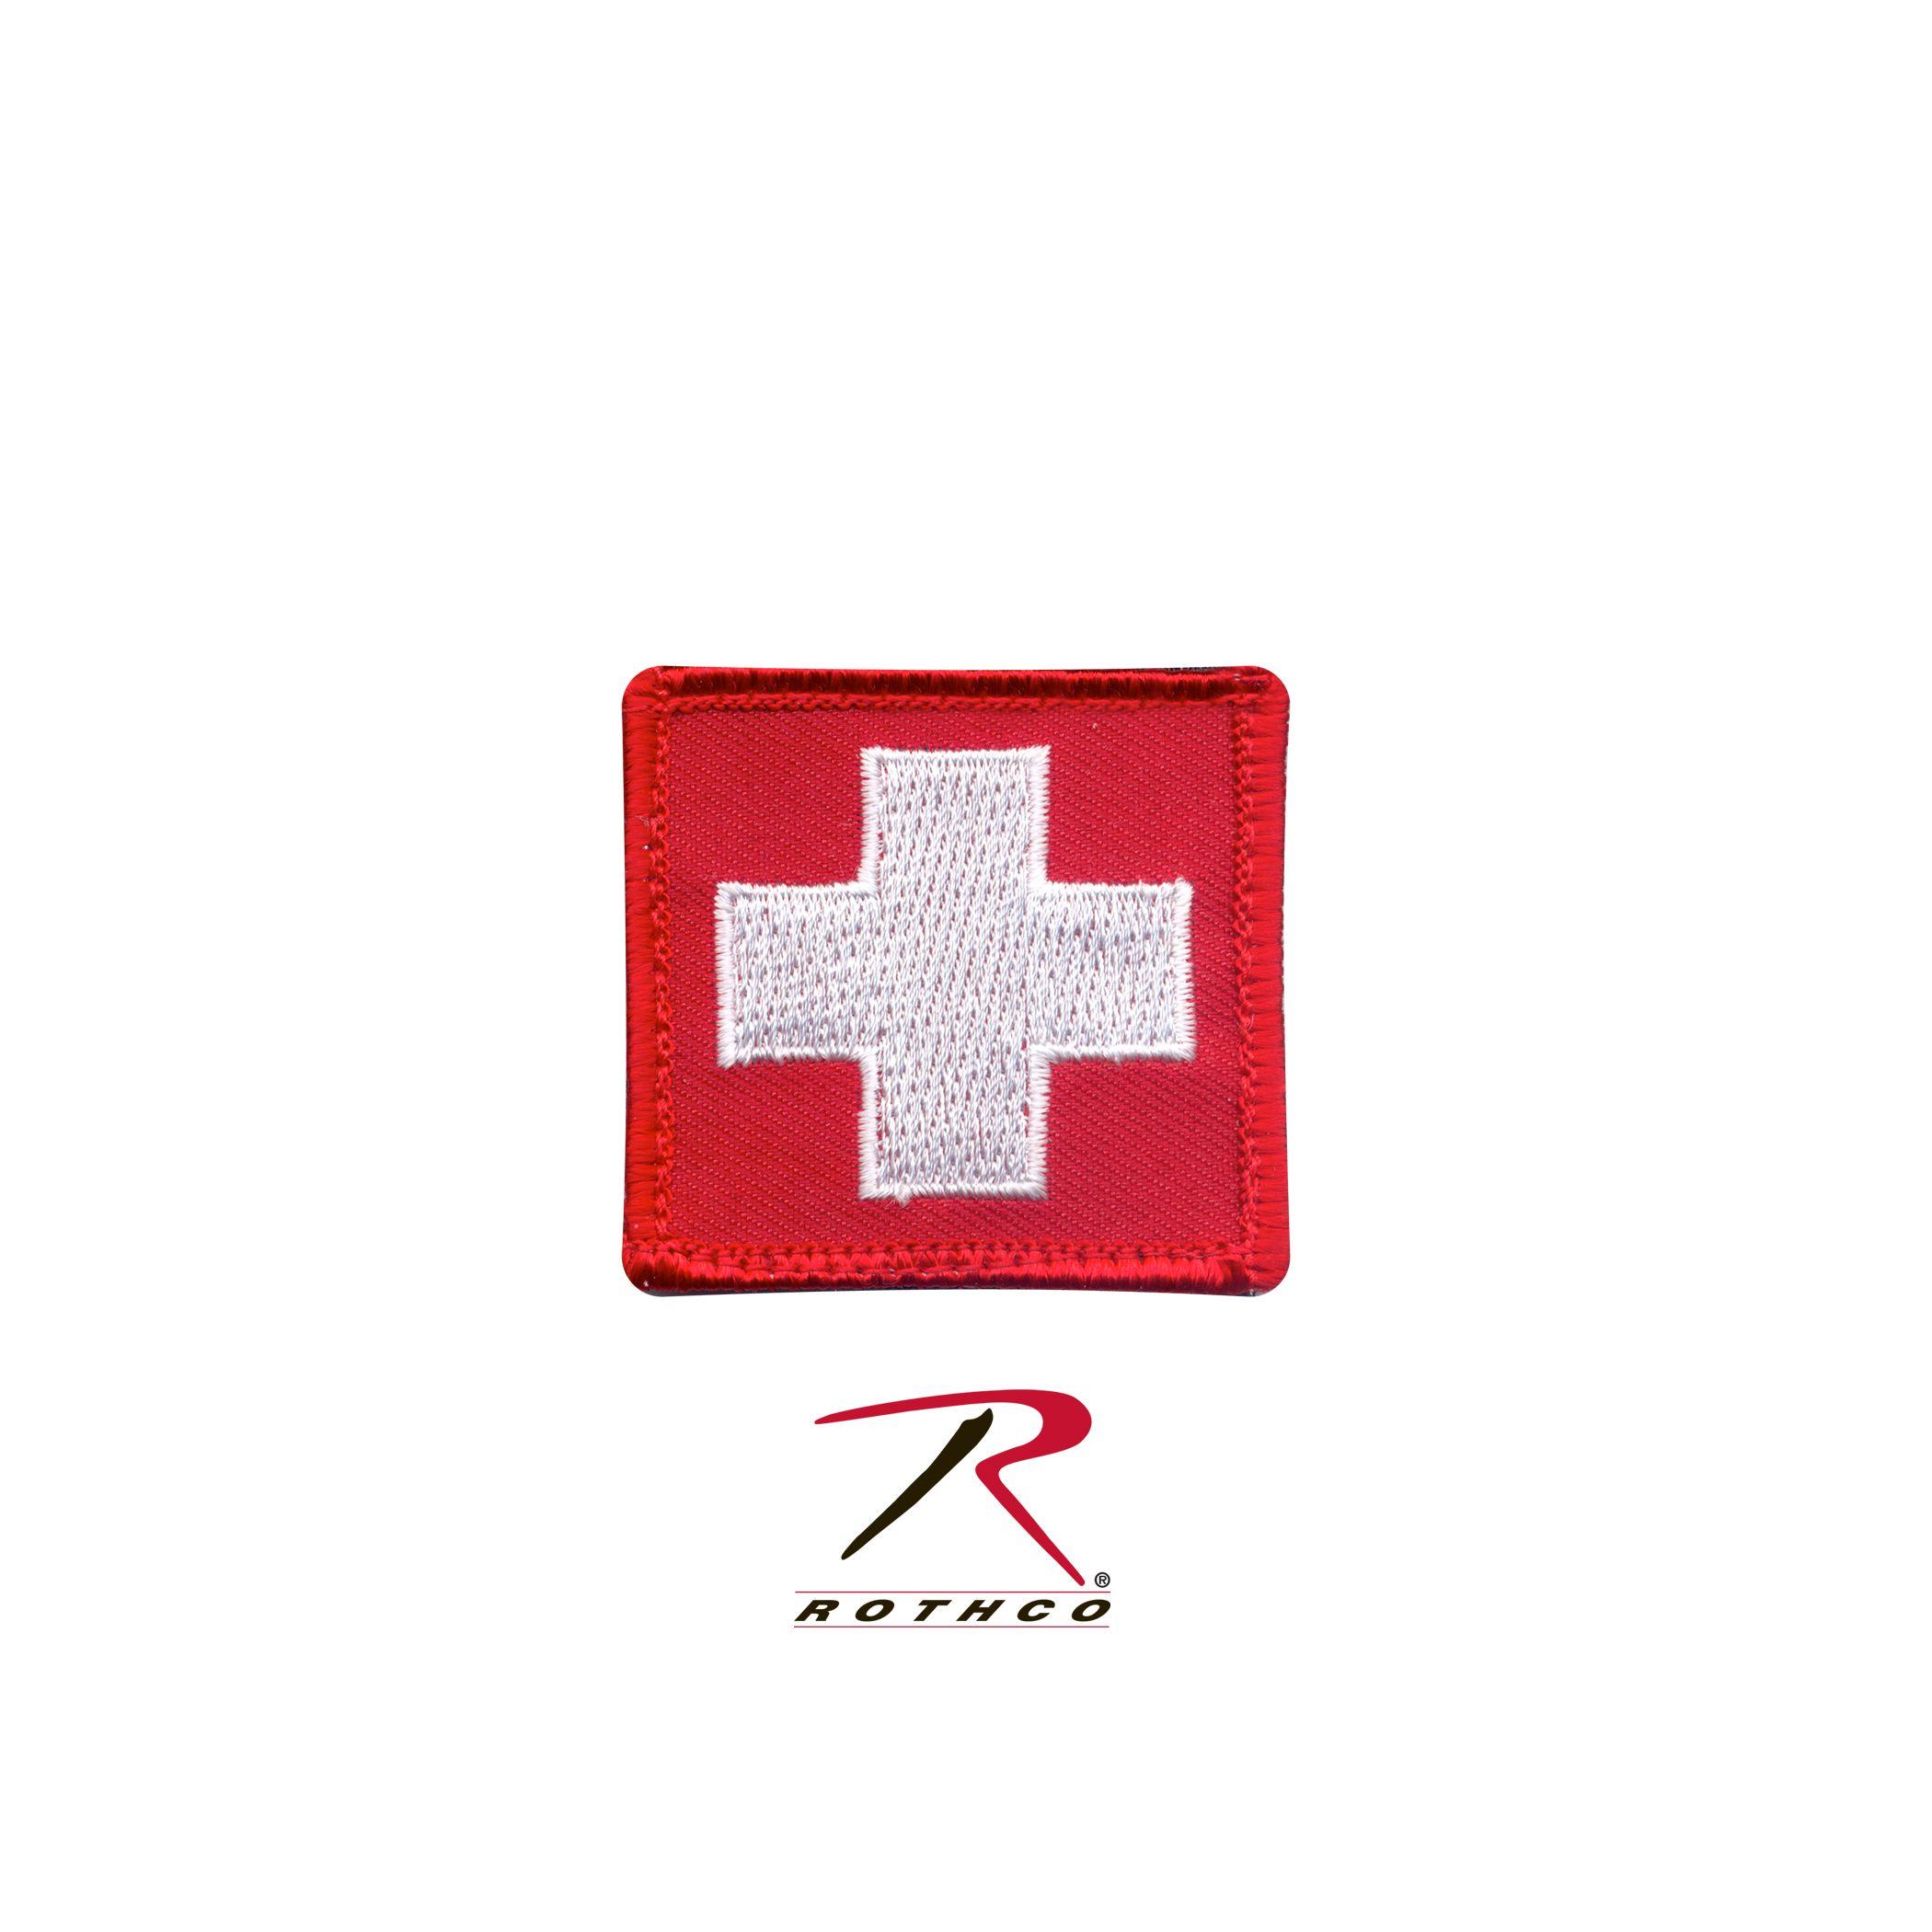 Red White Cross Company Logo - Red square white cross Logos